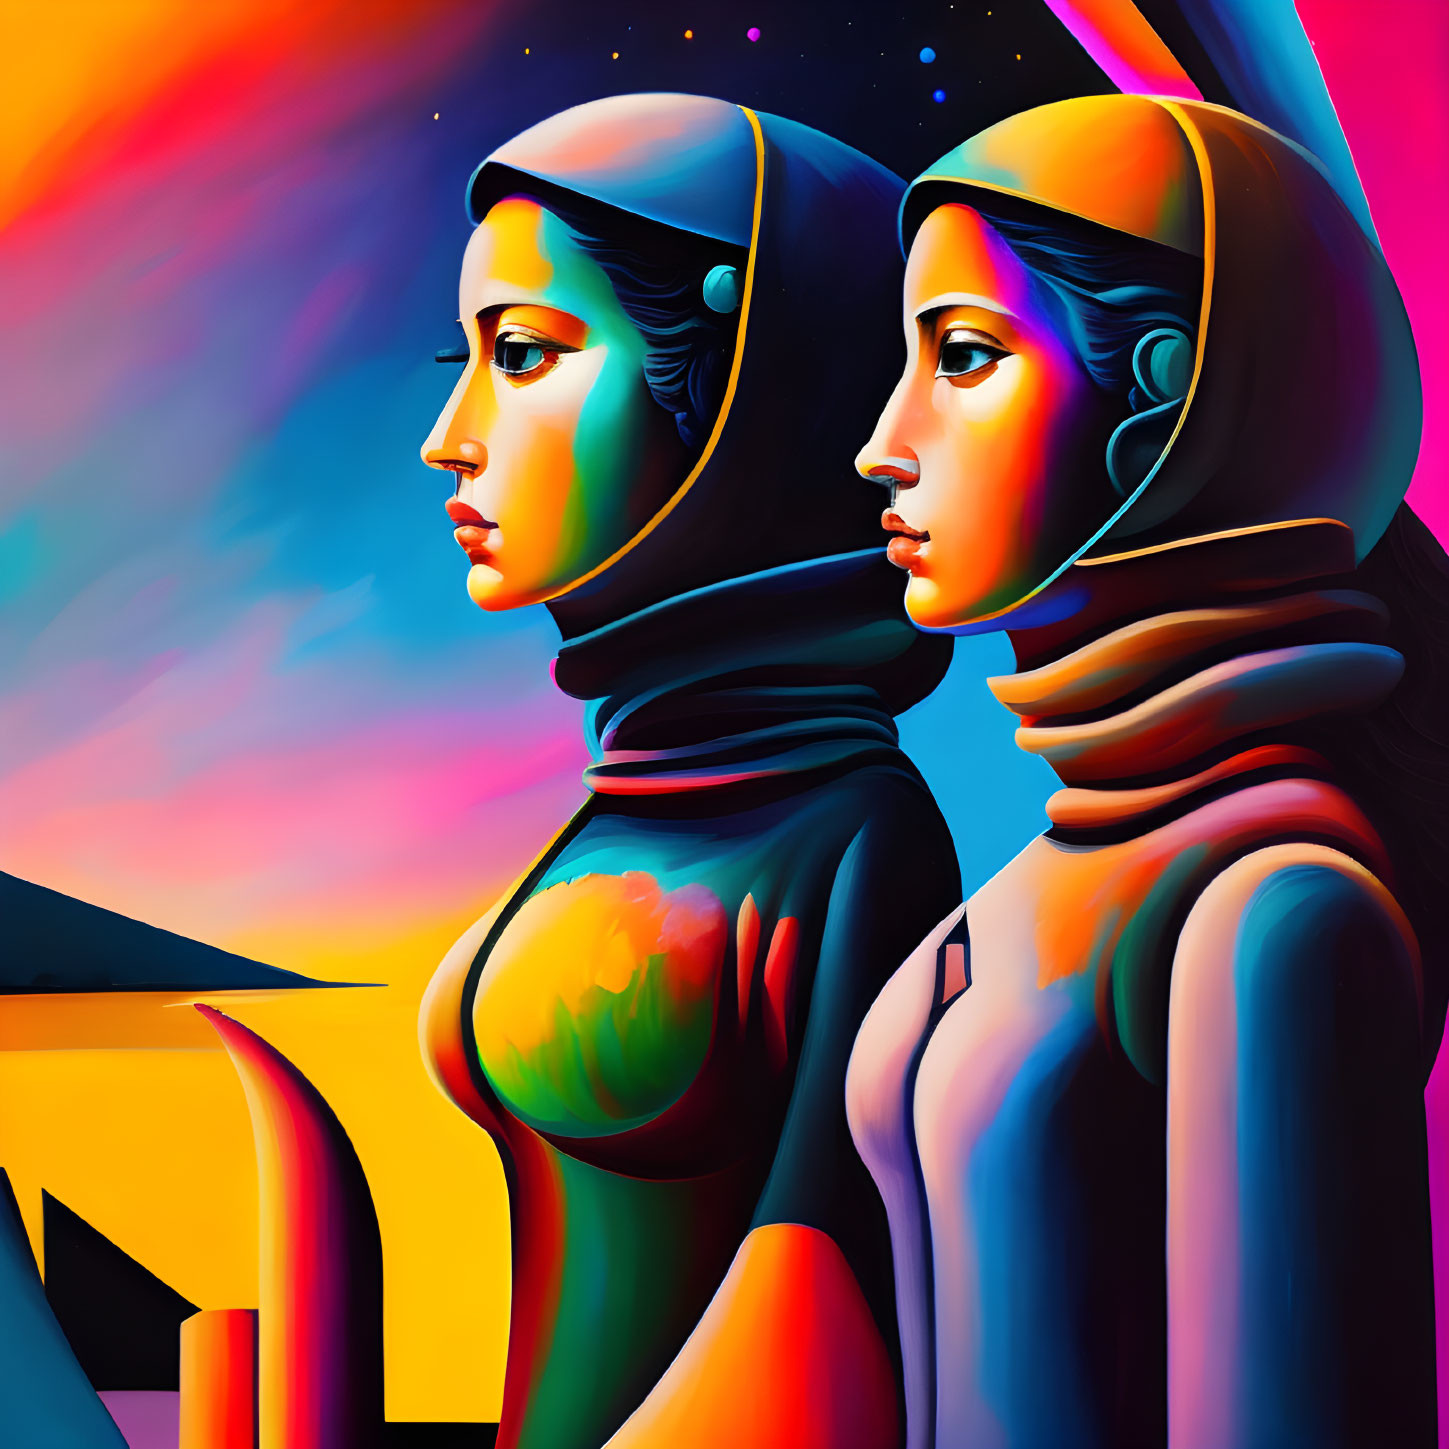 Stylized women in retro space helmets on vibrant cosmic background